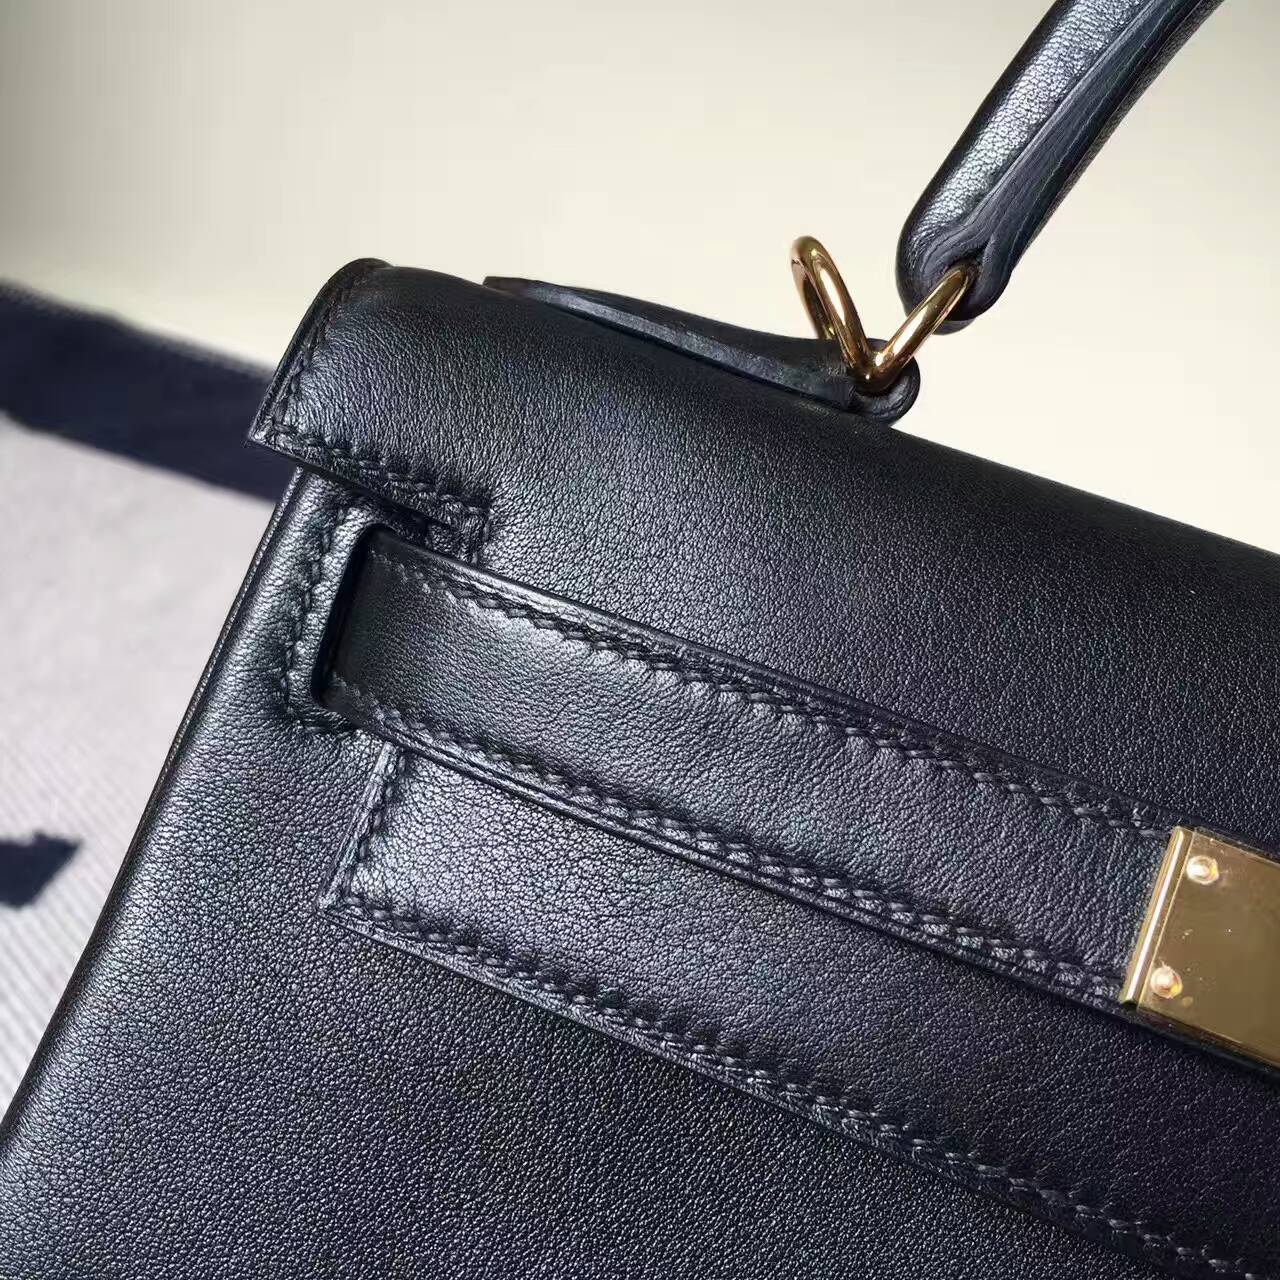 Discount Hermes Swift Calf Leather Kelly Bag28CM in CK89 Black Gold Hardware